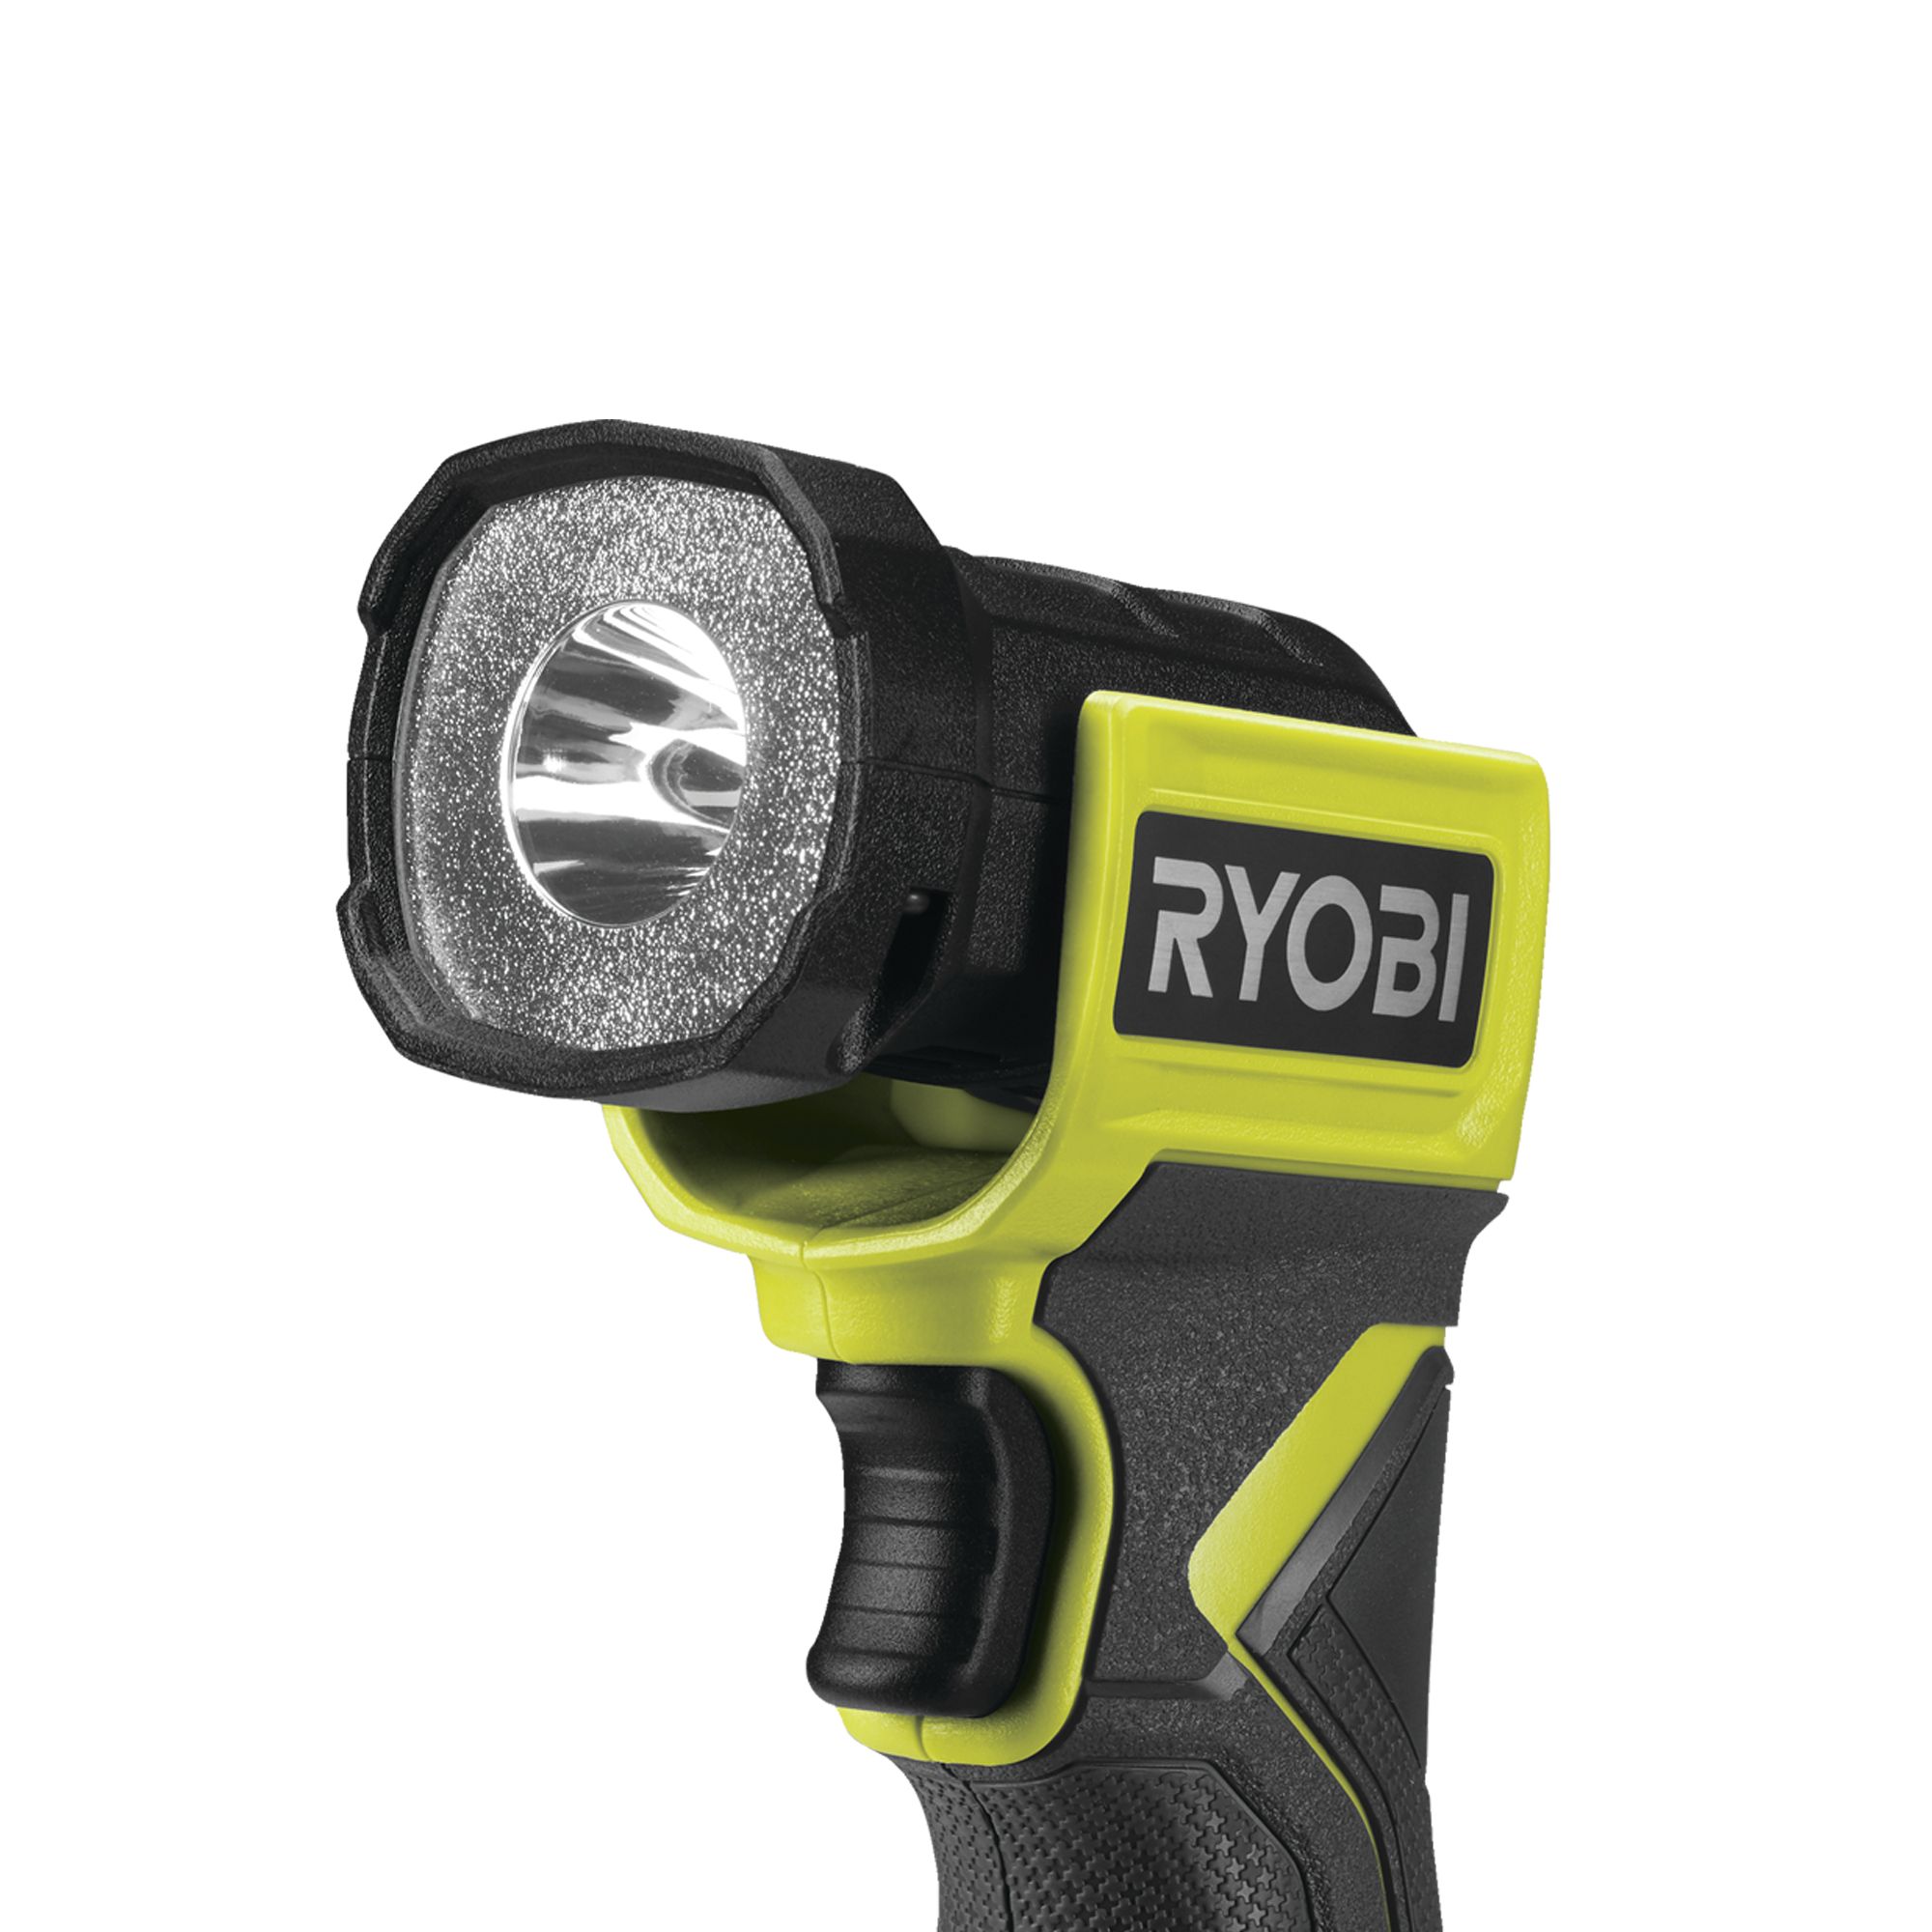 Ryobi ONE+ 18V Li-ion LED Cordless Torch RLF18-0 - Bare unit